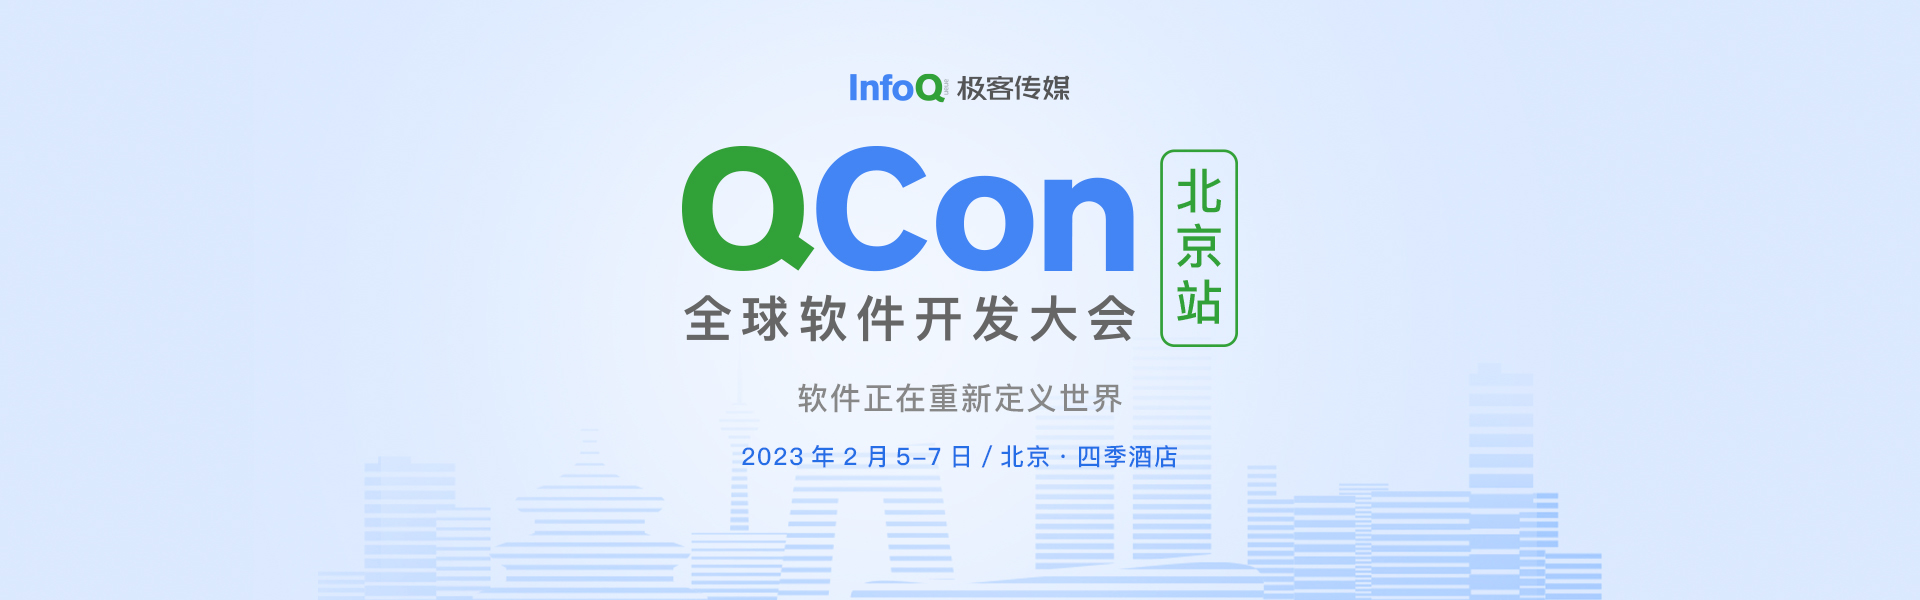 QCon全球软件开发大会（北京站）2022